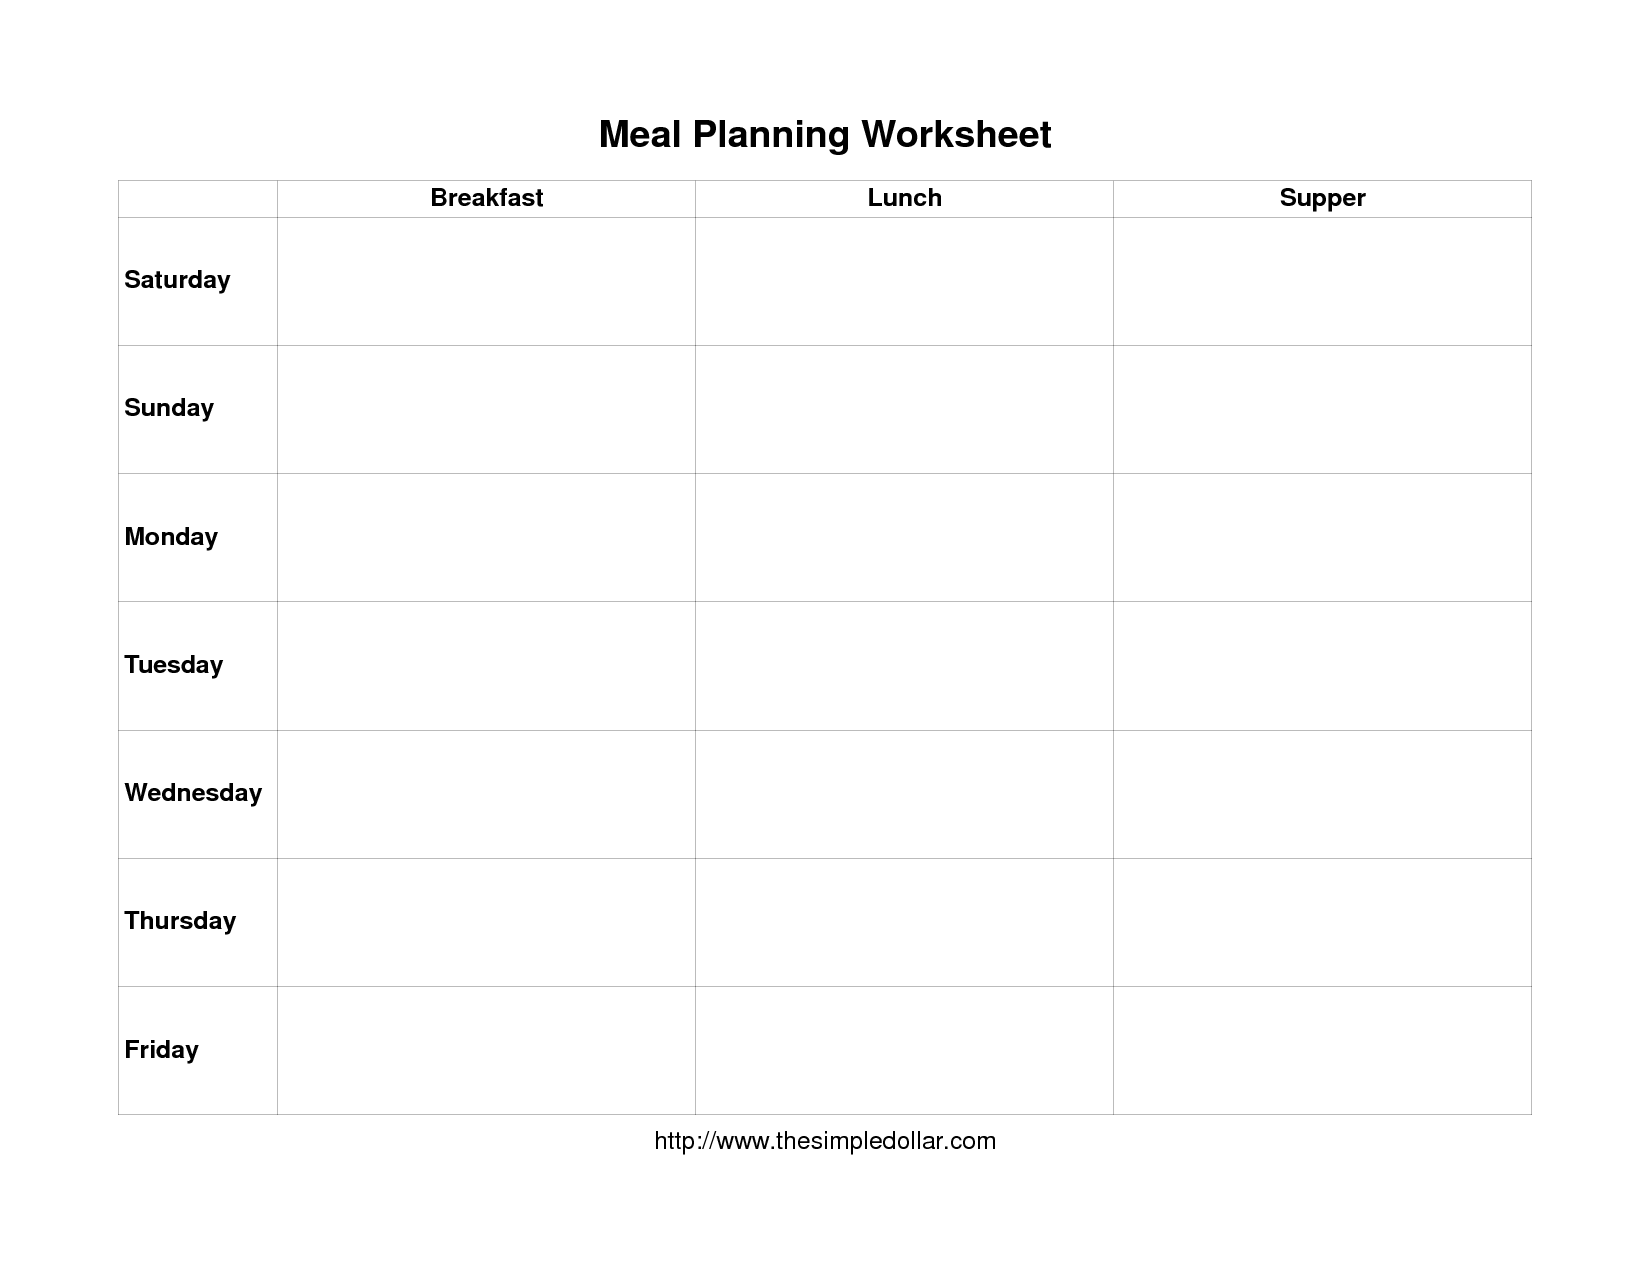 Diet Meal Planning Worksheet Image